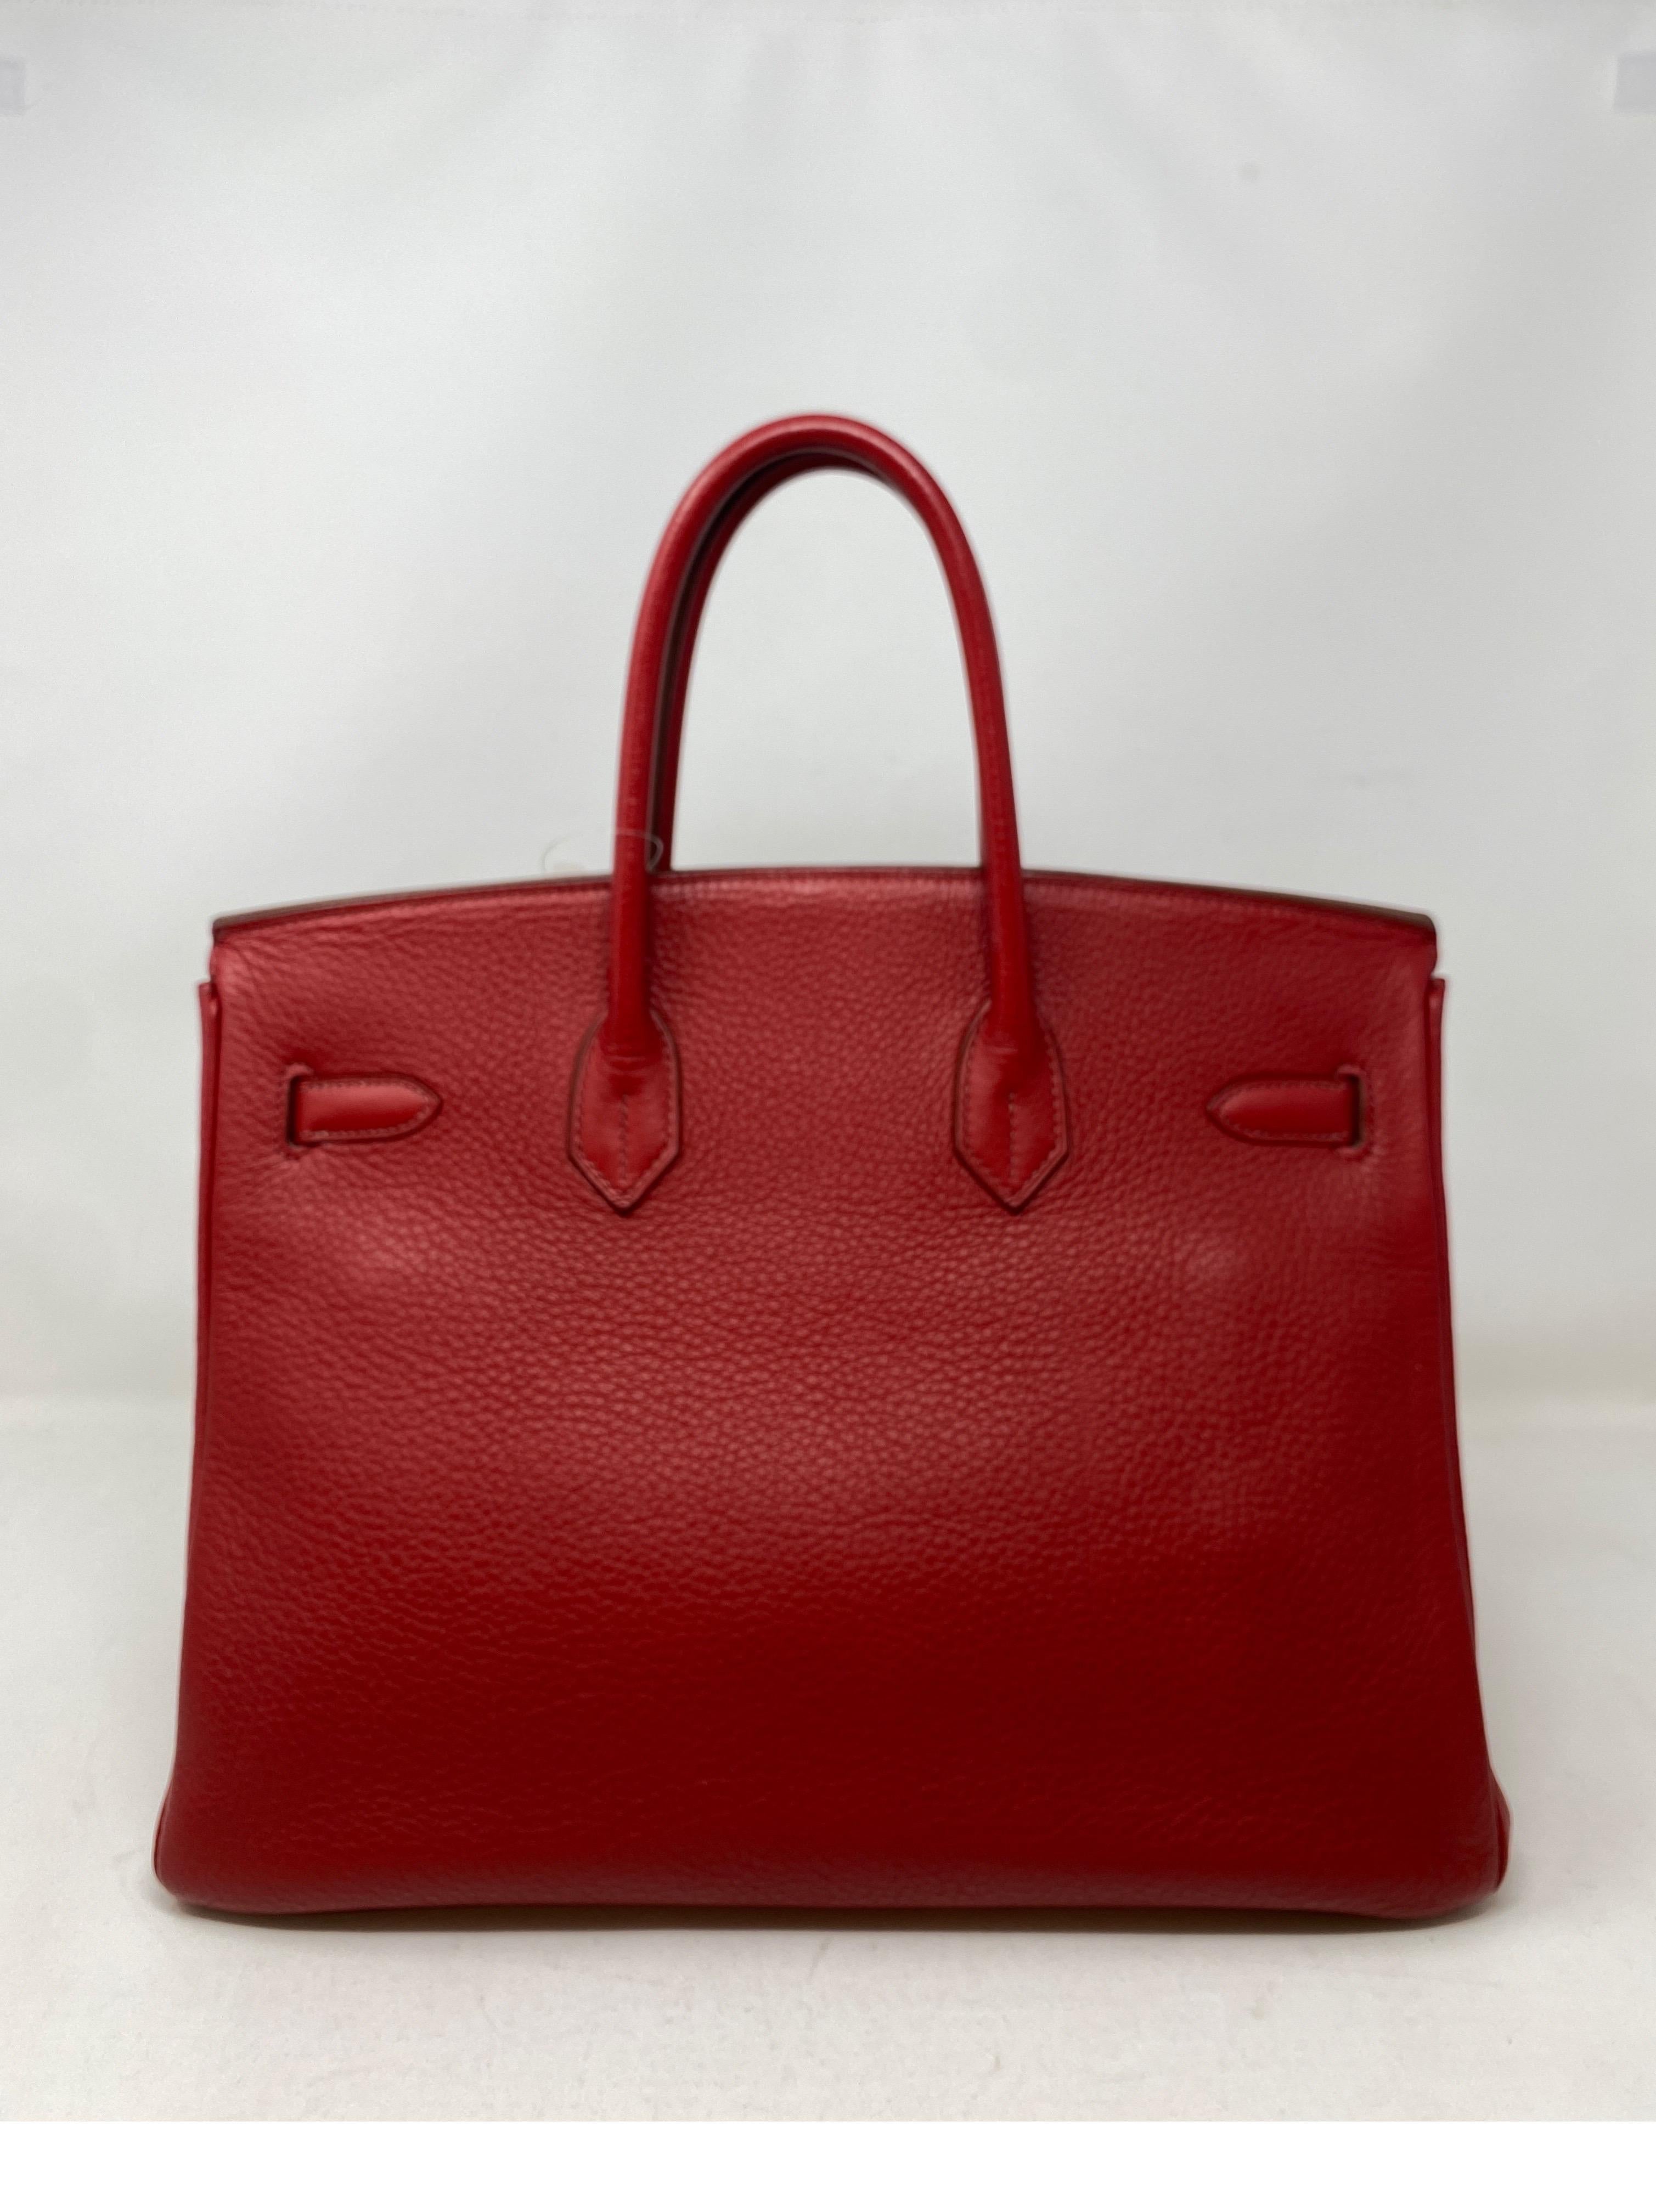 Red Hermes Rouge Garance Birkin 35 Bag